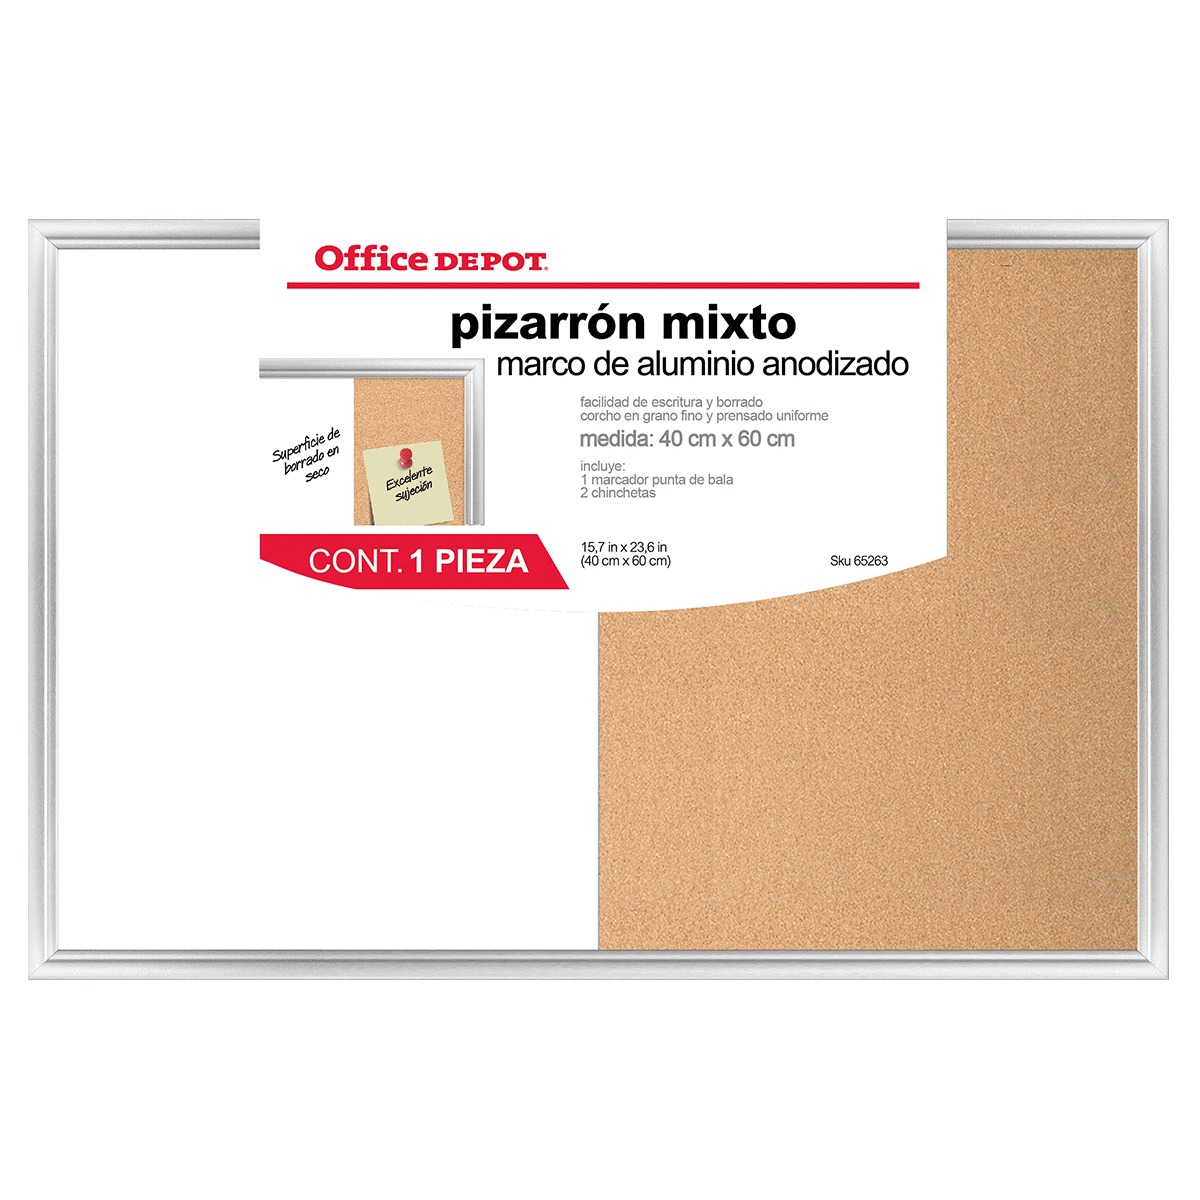 PIZARRON MIXTO OD (BLANCO CORCHO, 40X60) | Office Depot Mexico